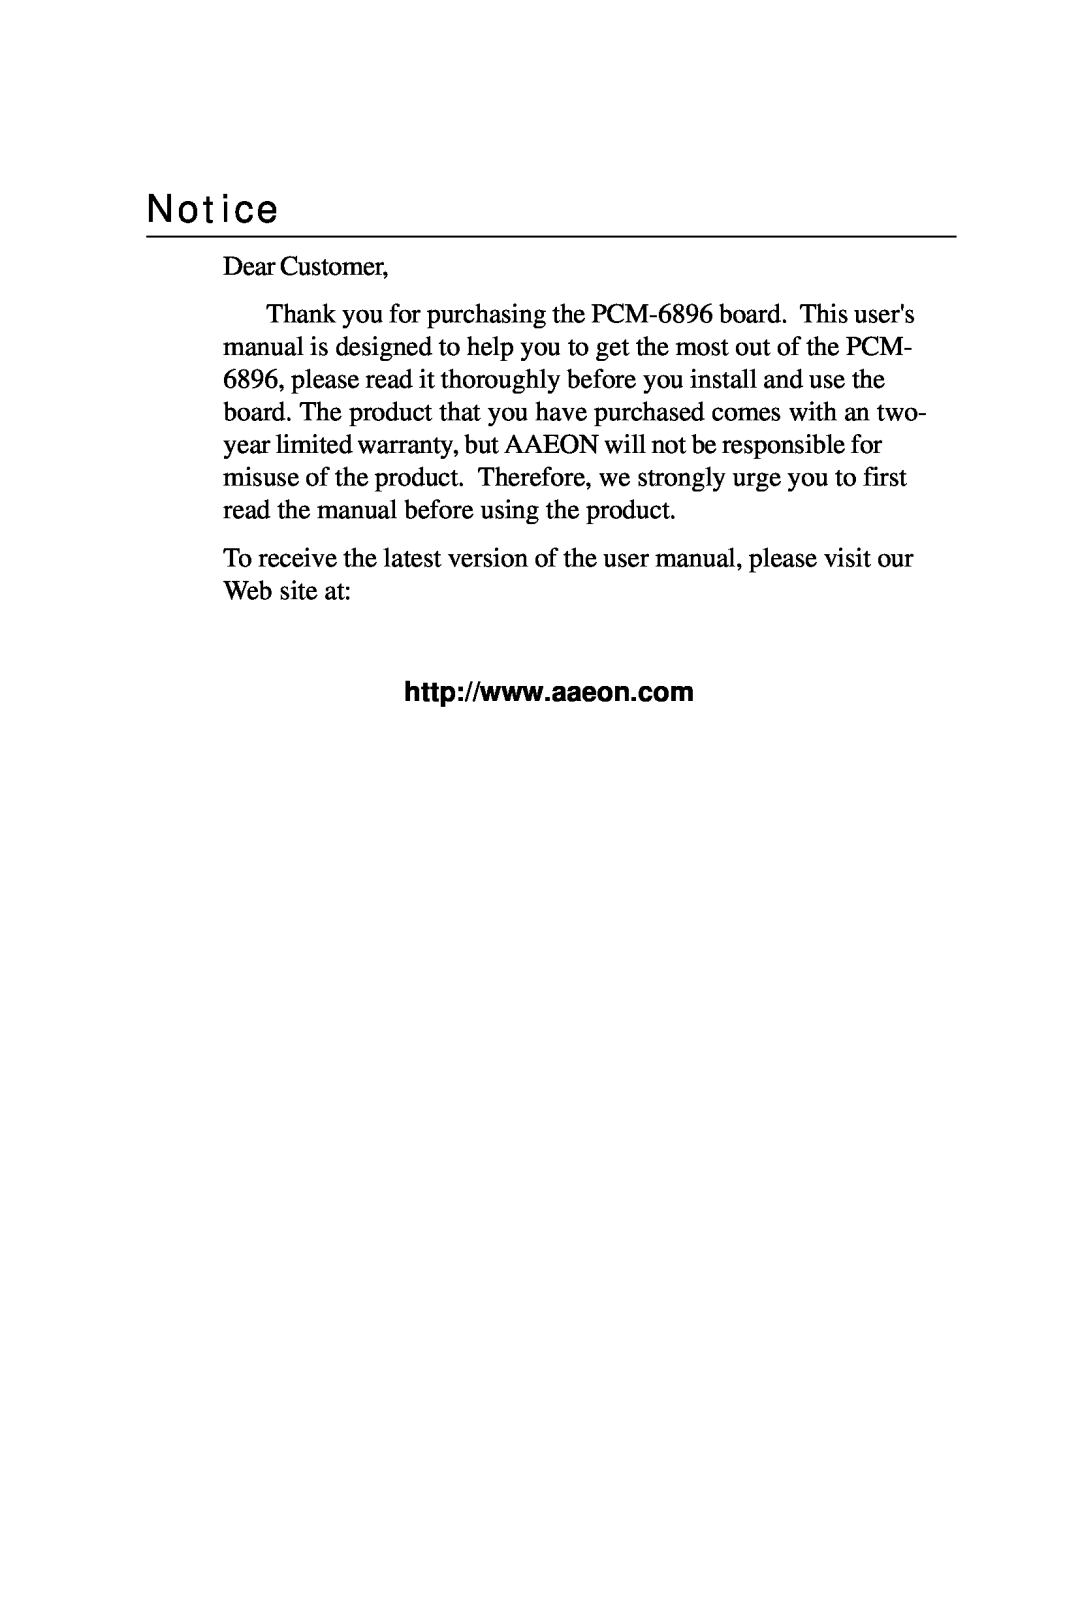 Intel PCM-6896 manual Dear Customer 